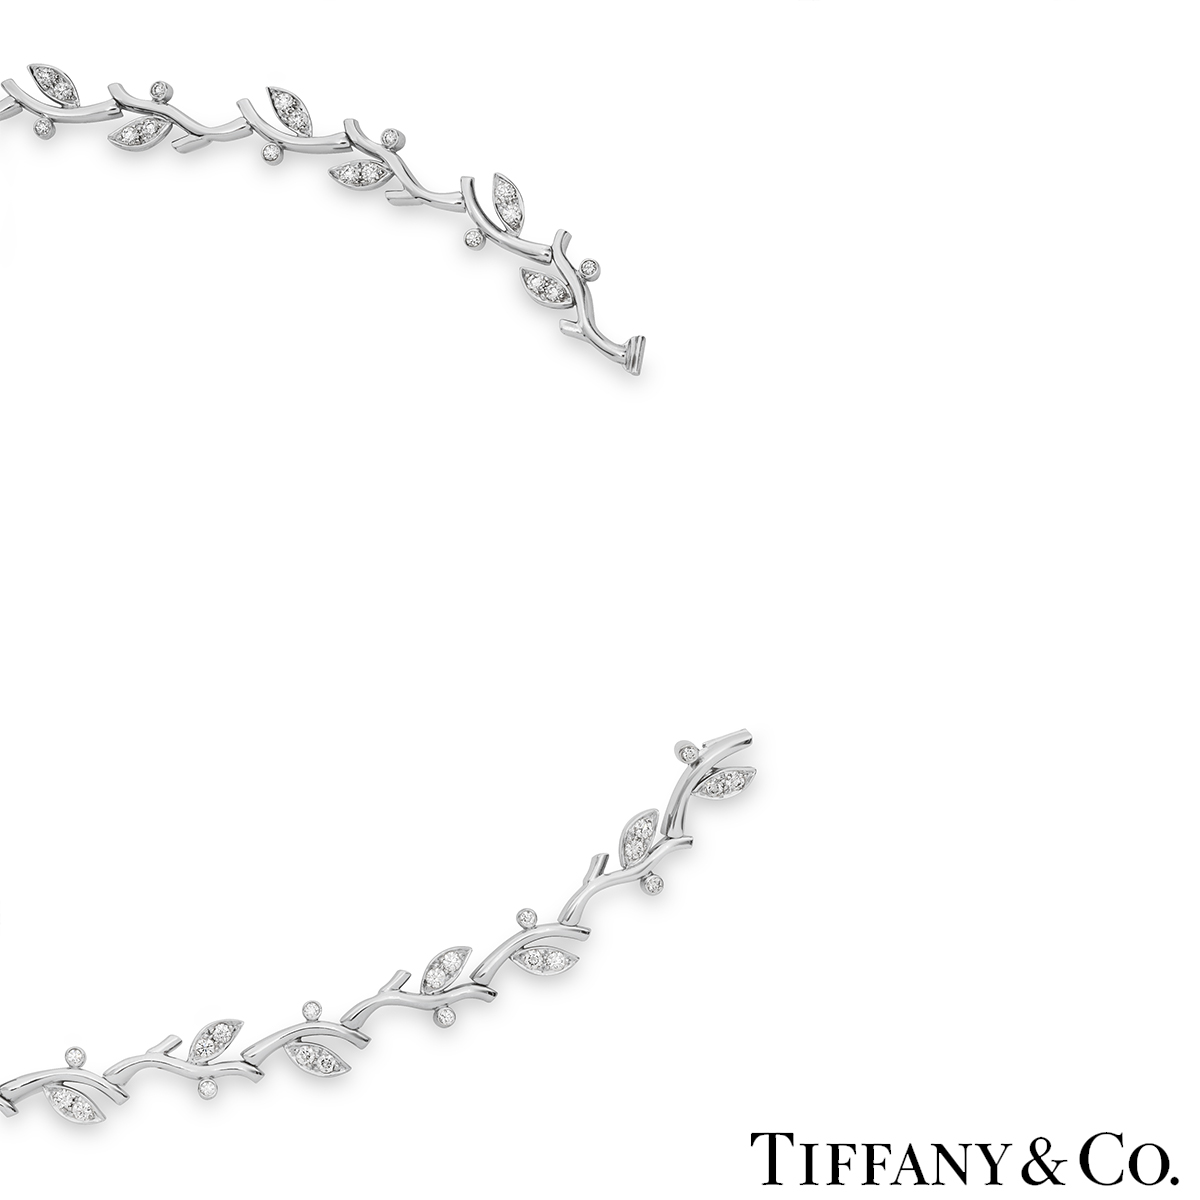 Tiffany & Co. Platinum Diamond Olive Leaf Vine Necklace